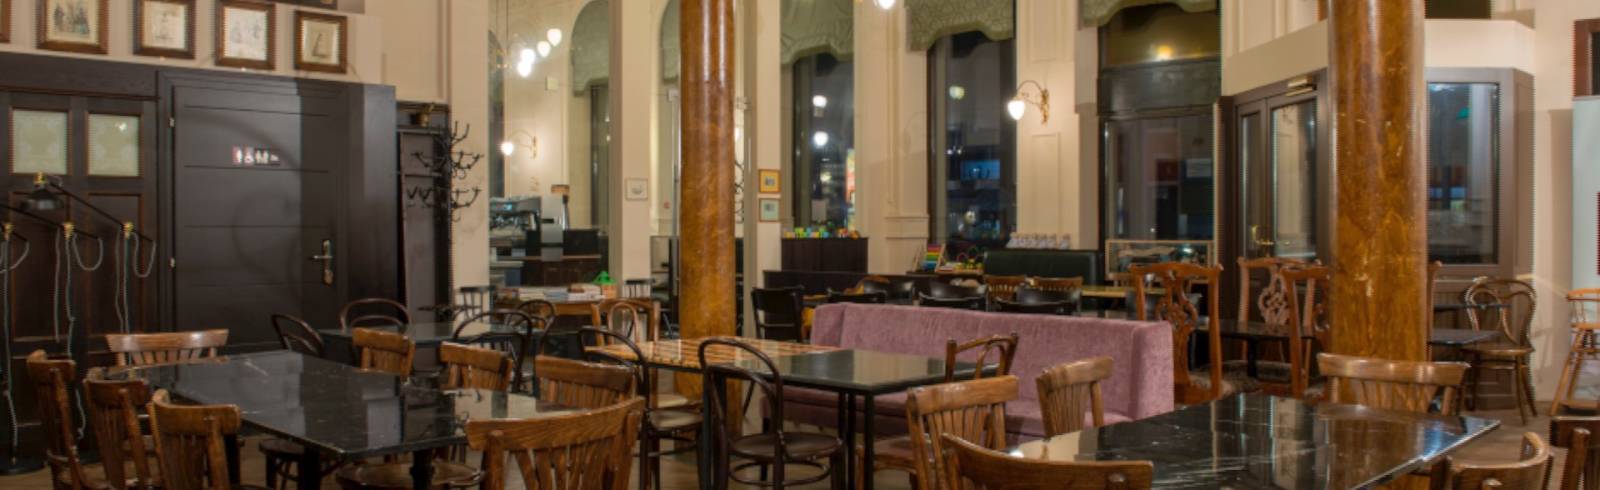 Bezirksflash: Cafe Ritter insolvent